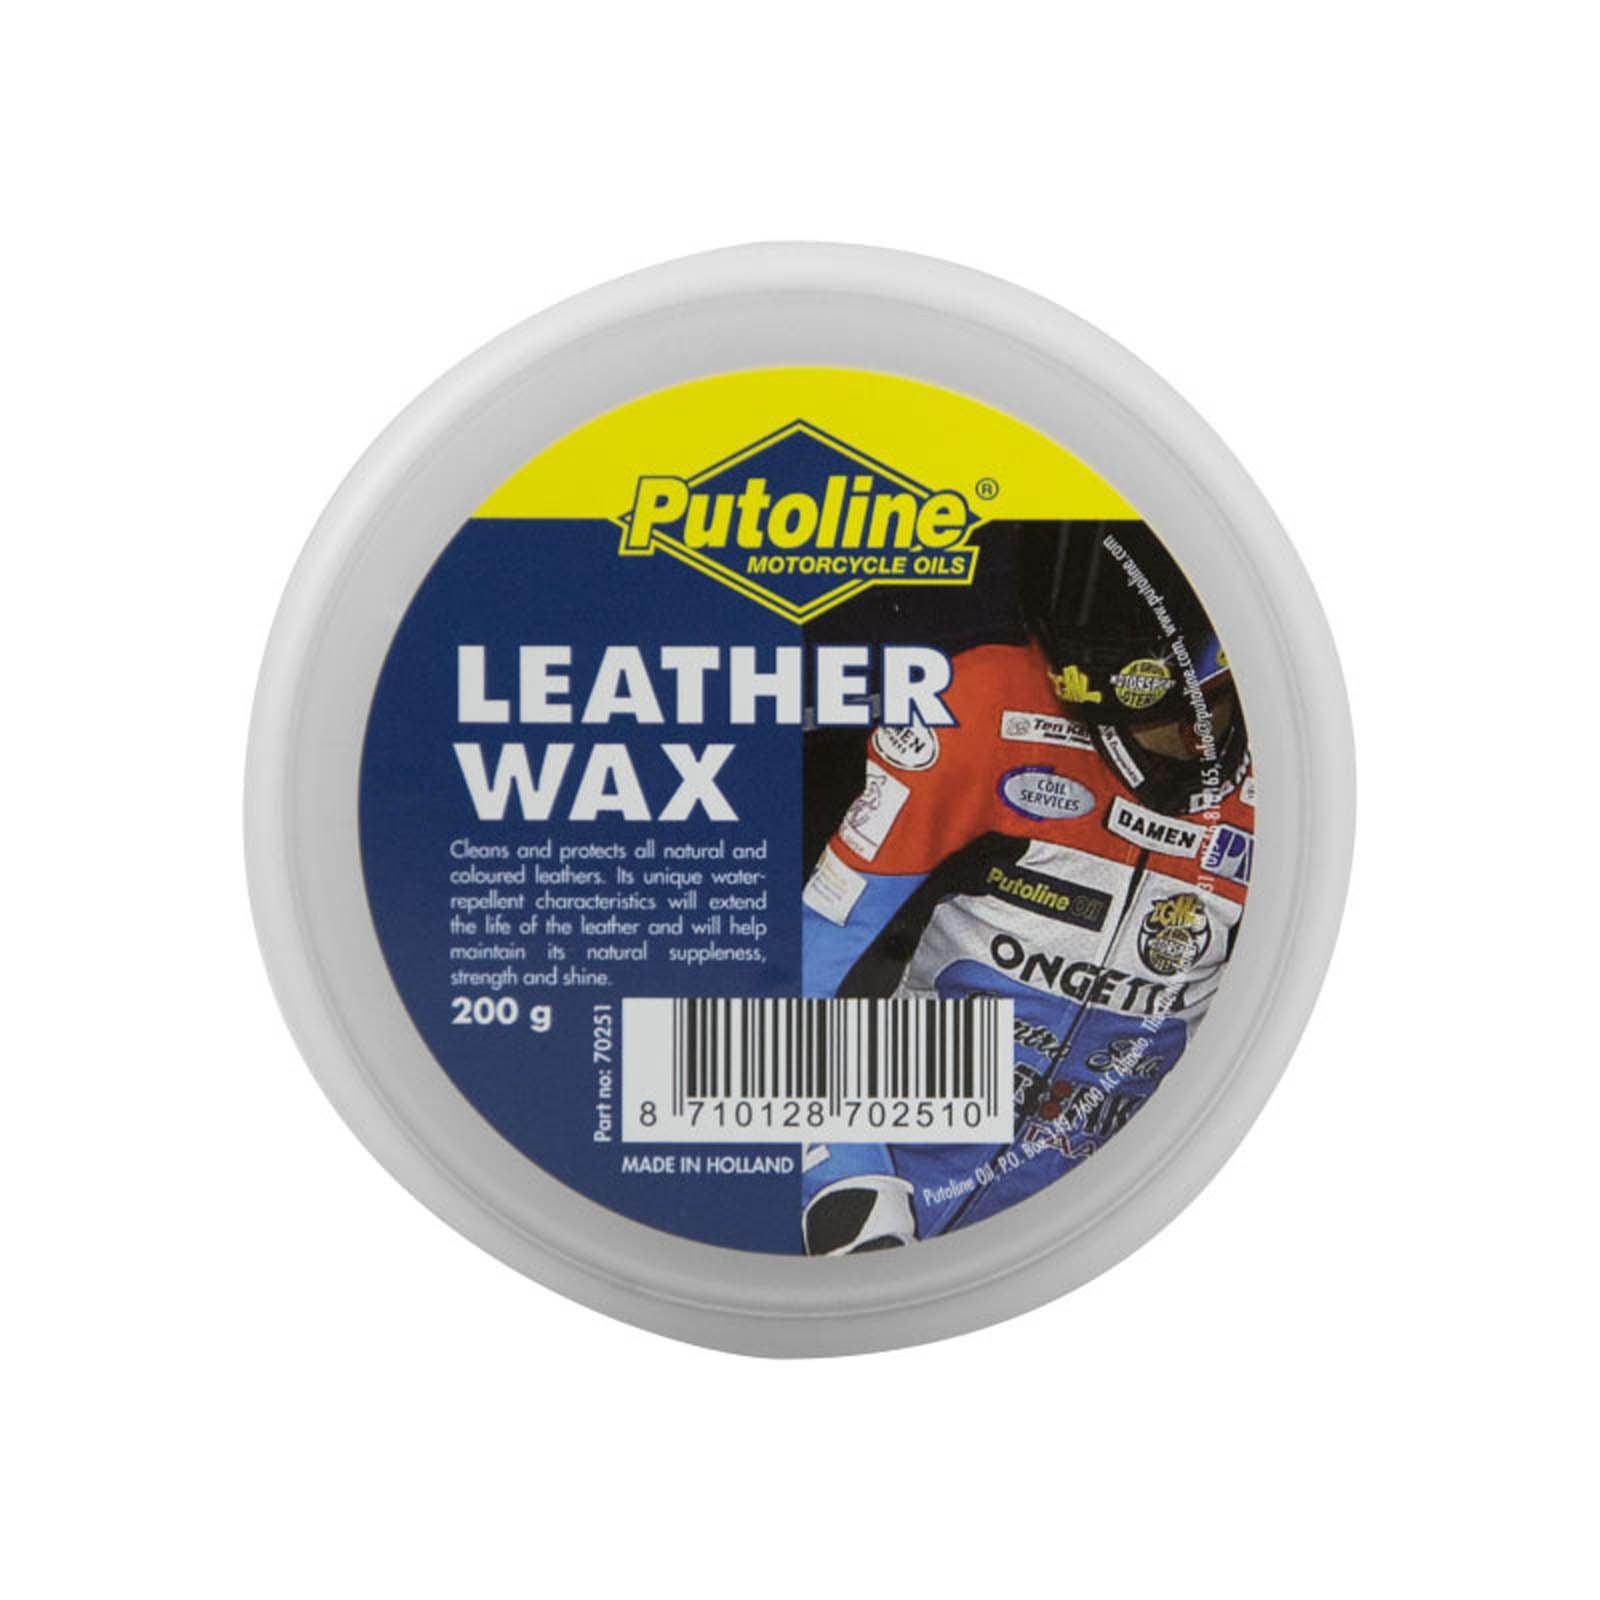 New PUTOLINE Leather Wax - 200g #PTLW200